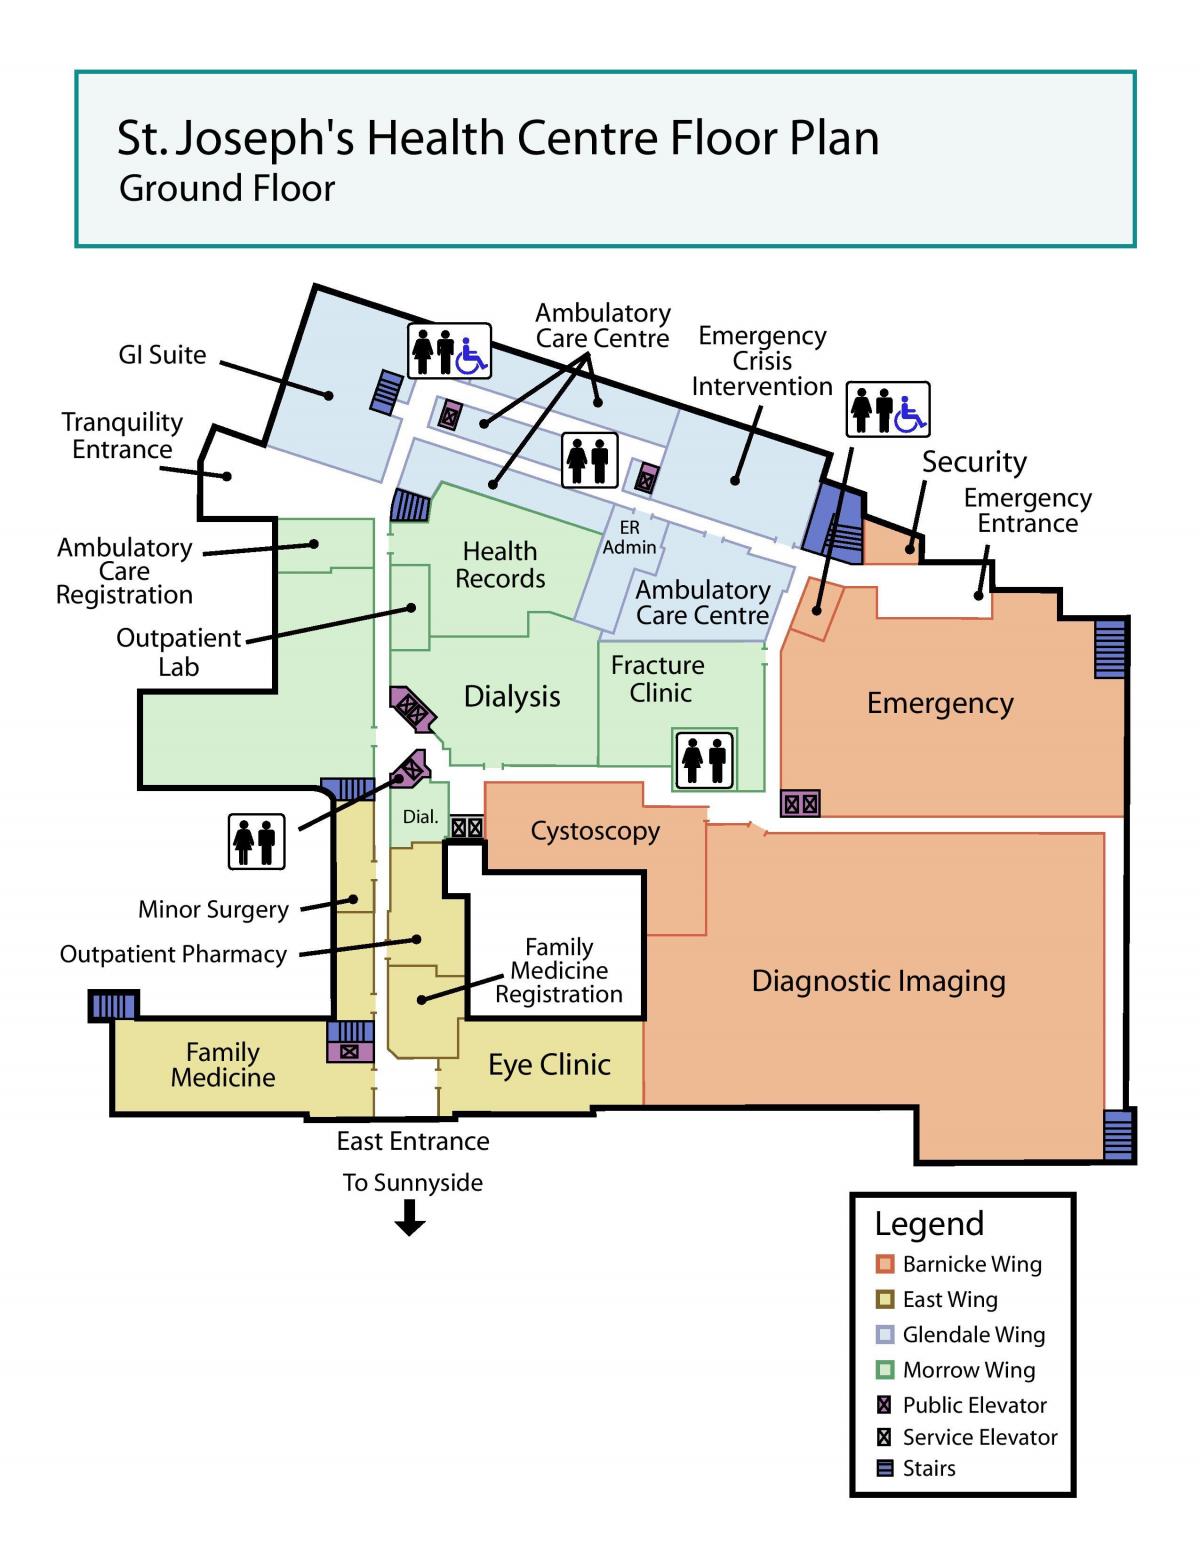 Peta dari St. Joseph Health Centre lantai dasar